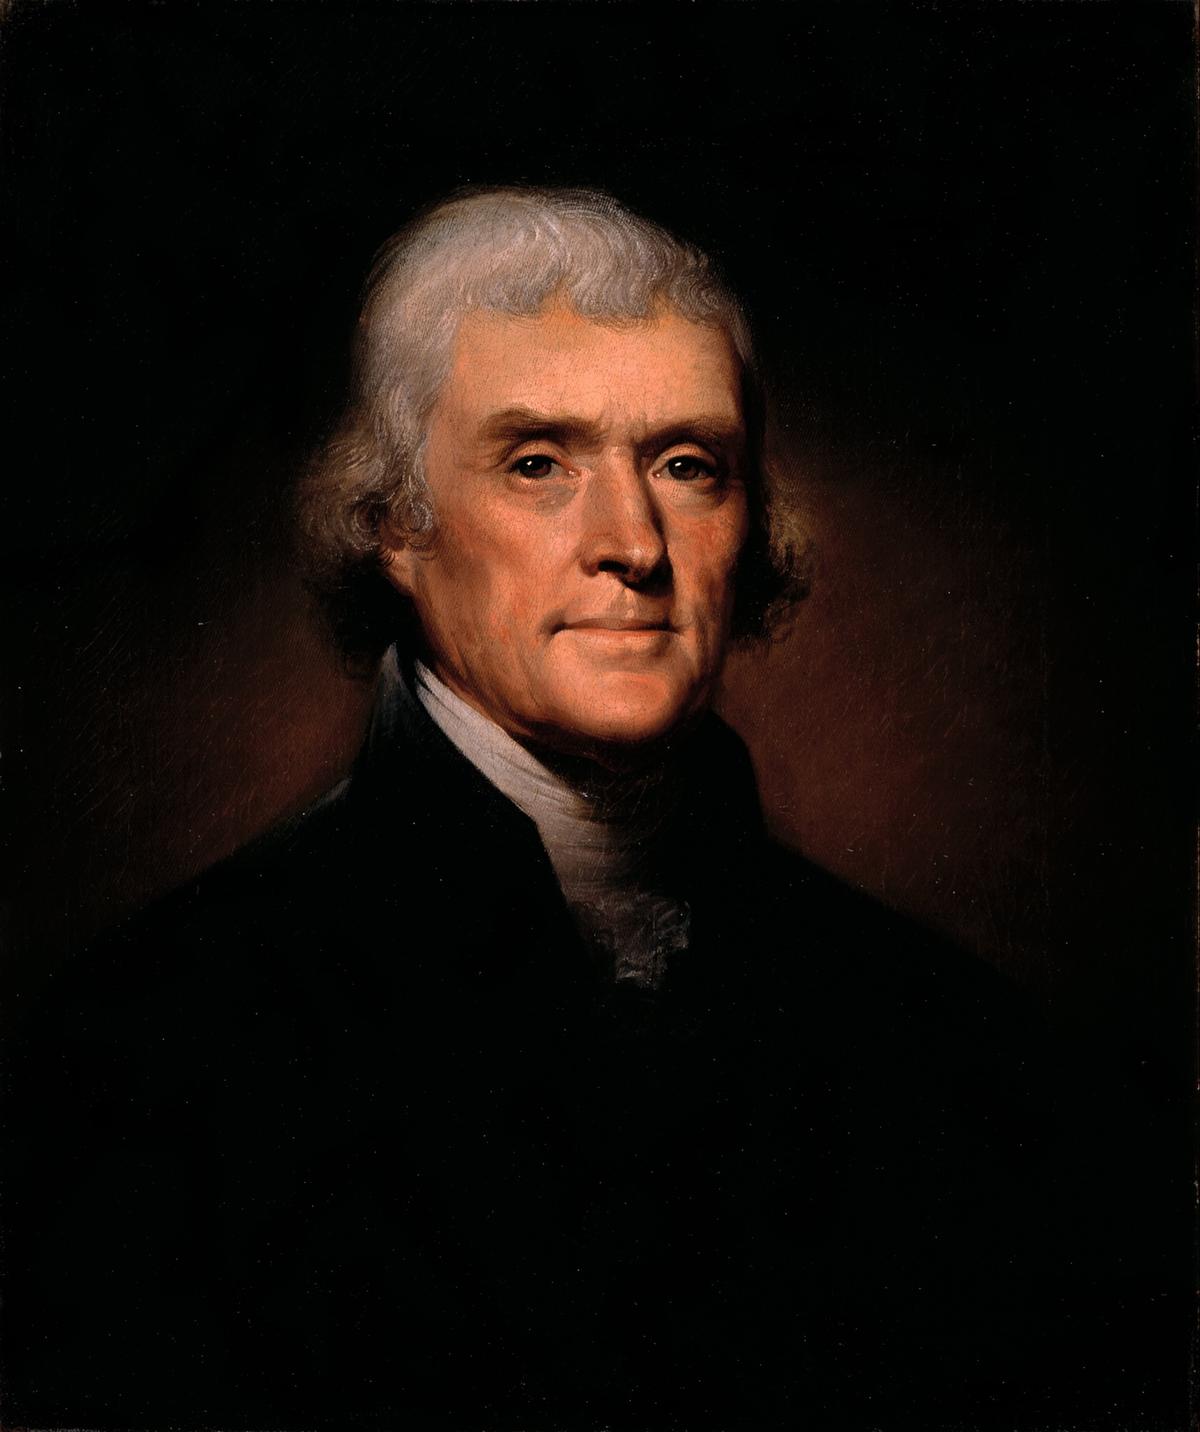 “Thomas Jefferson” by Rembrandt Peale, 1800. Oil on canvas. White House. (Public Domain)